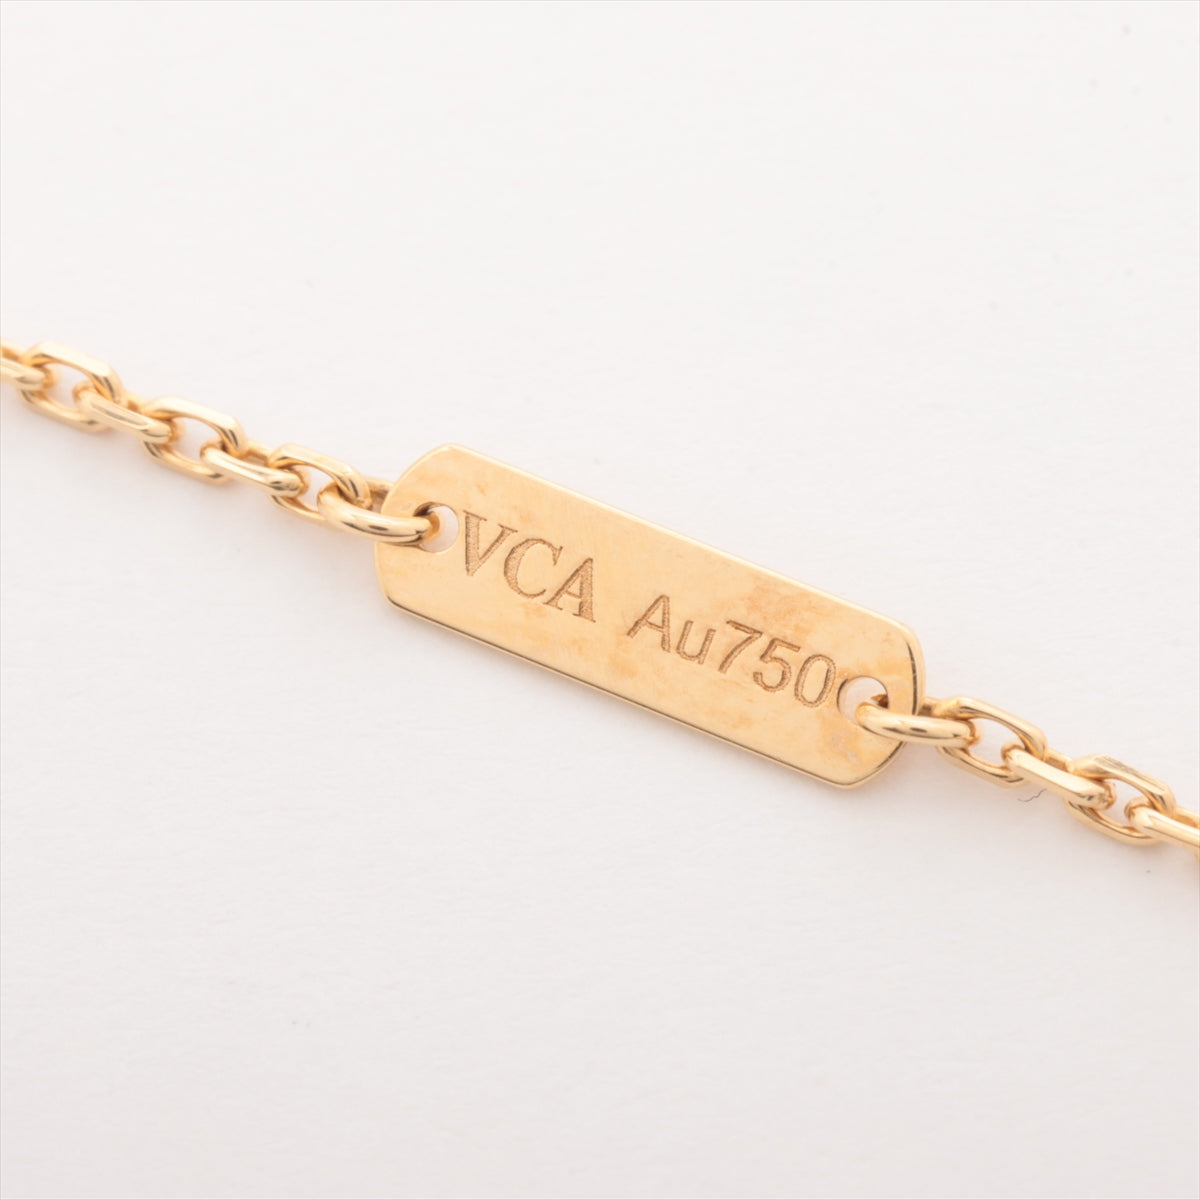 Van Cleef & Arpels Vintage Alhambra Golden shell diamond Necklace 750(YG) 6.6g Limited to 2018